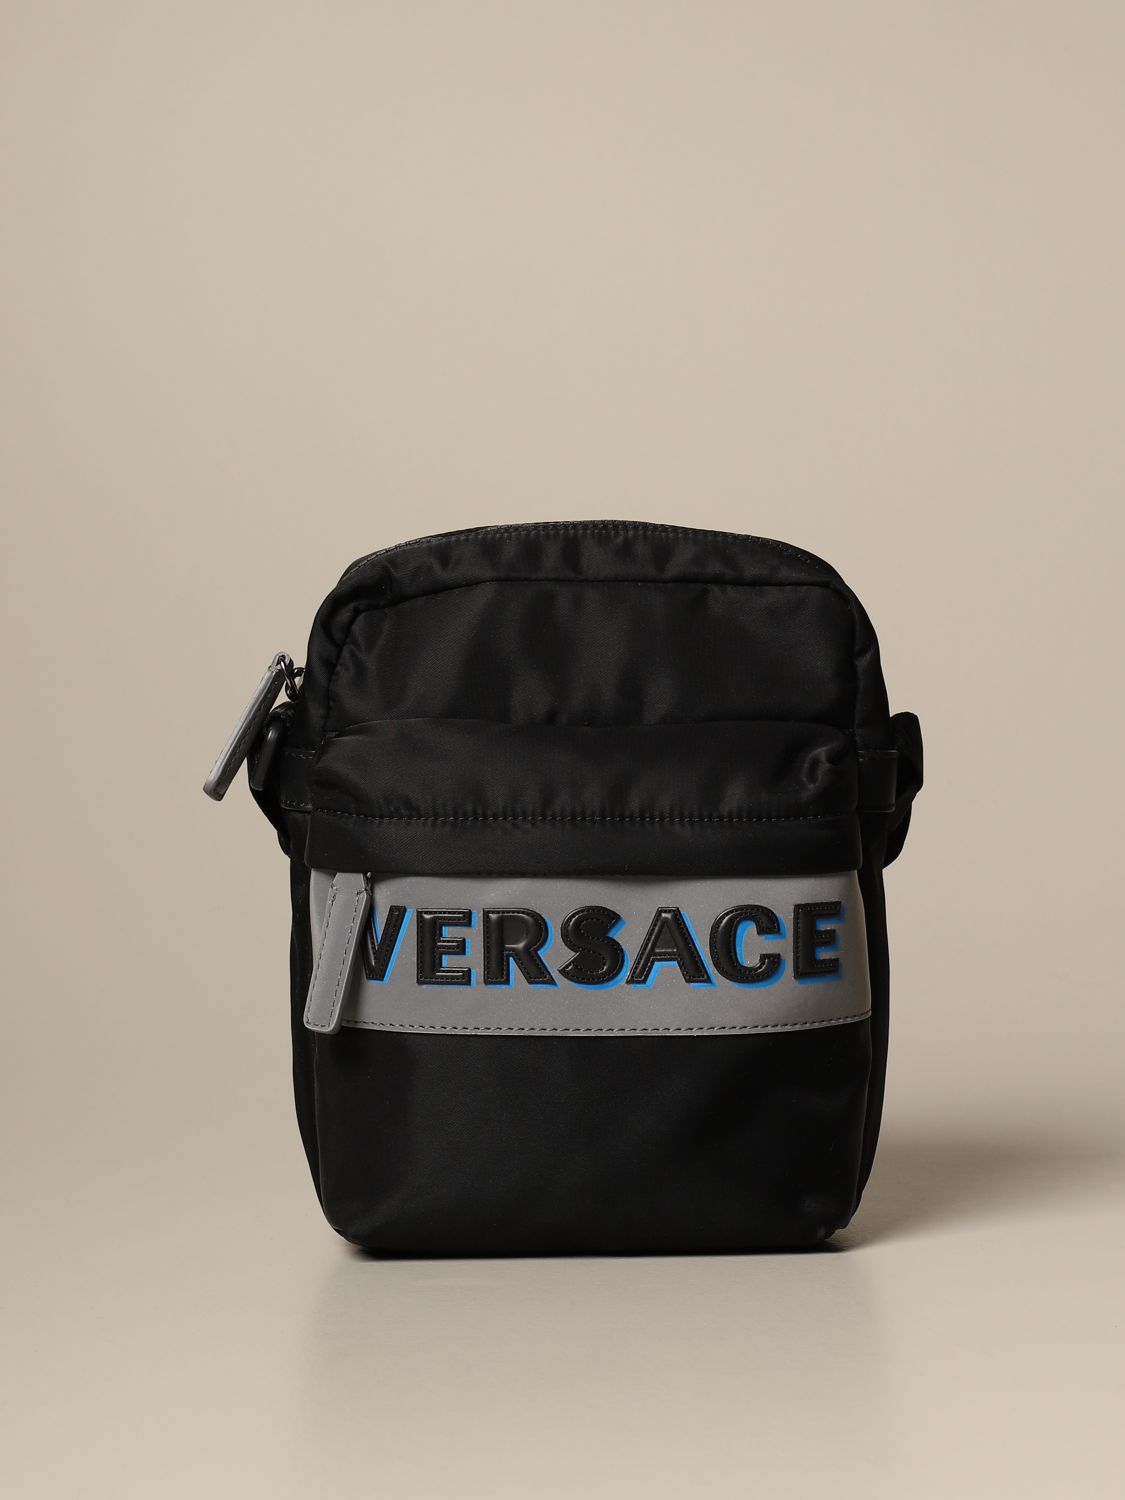 versace bags uk